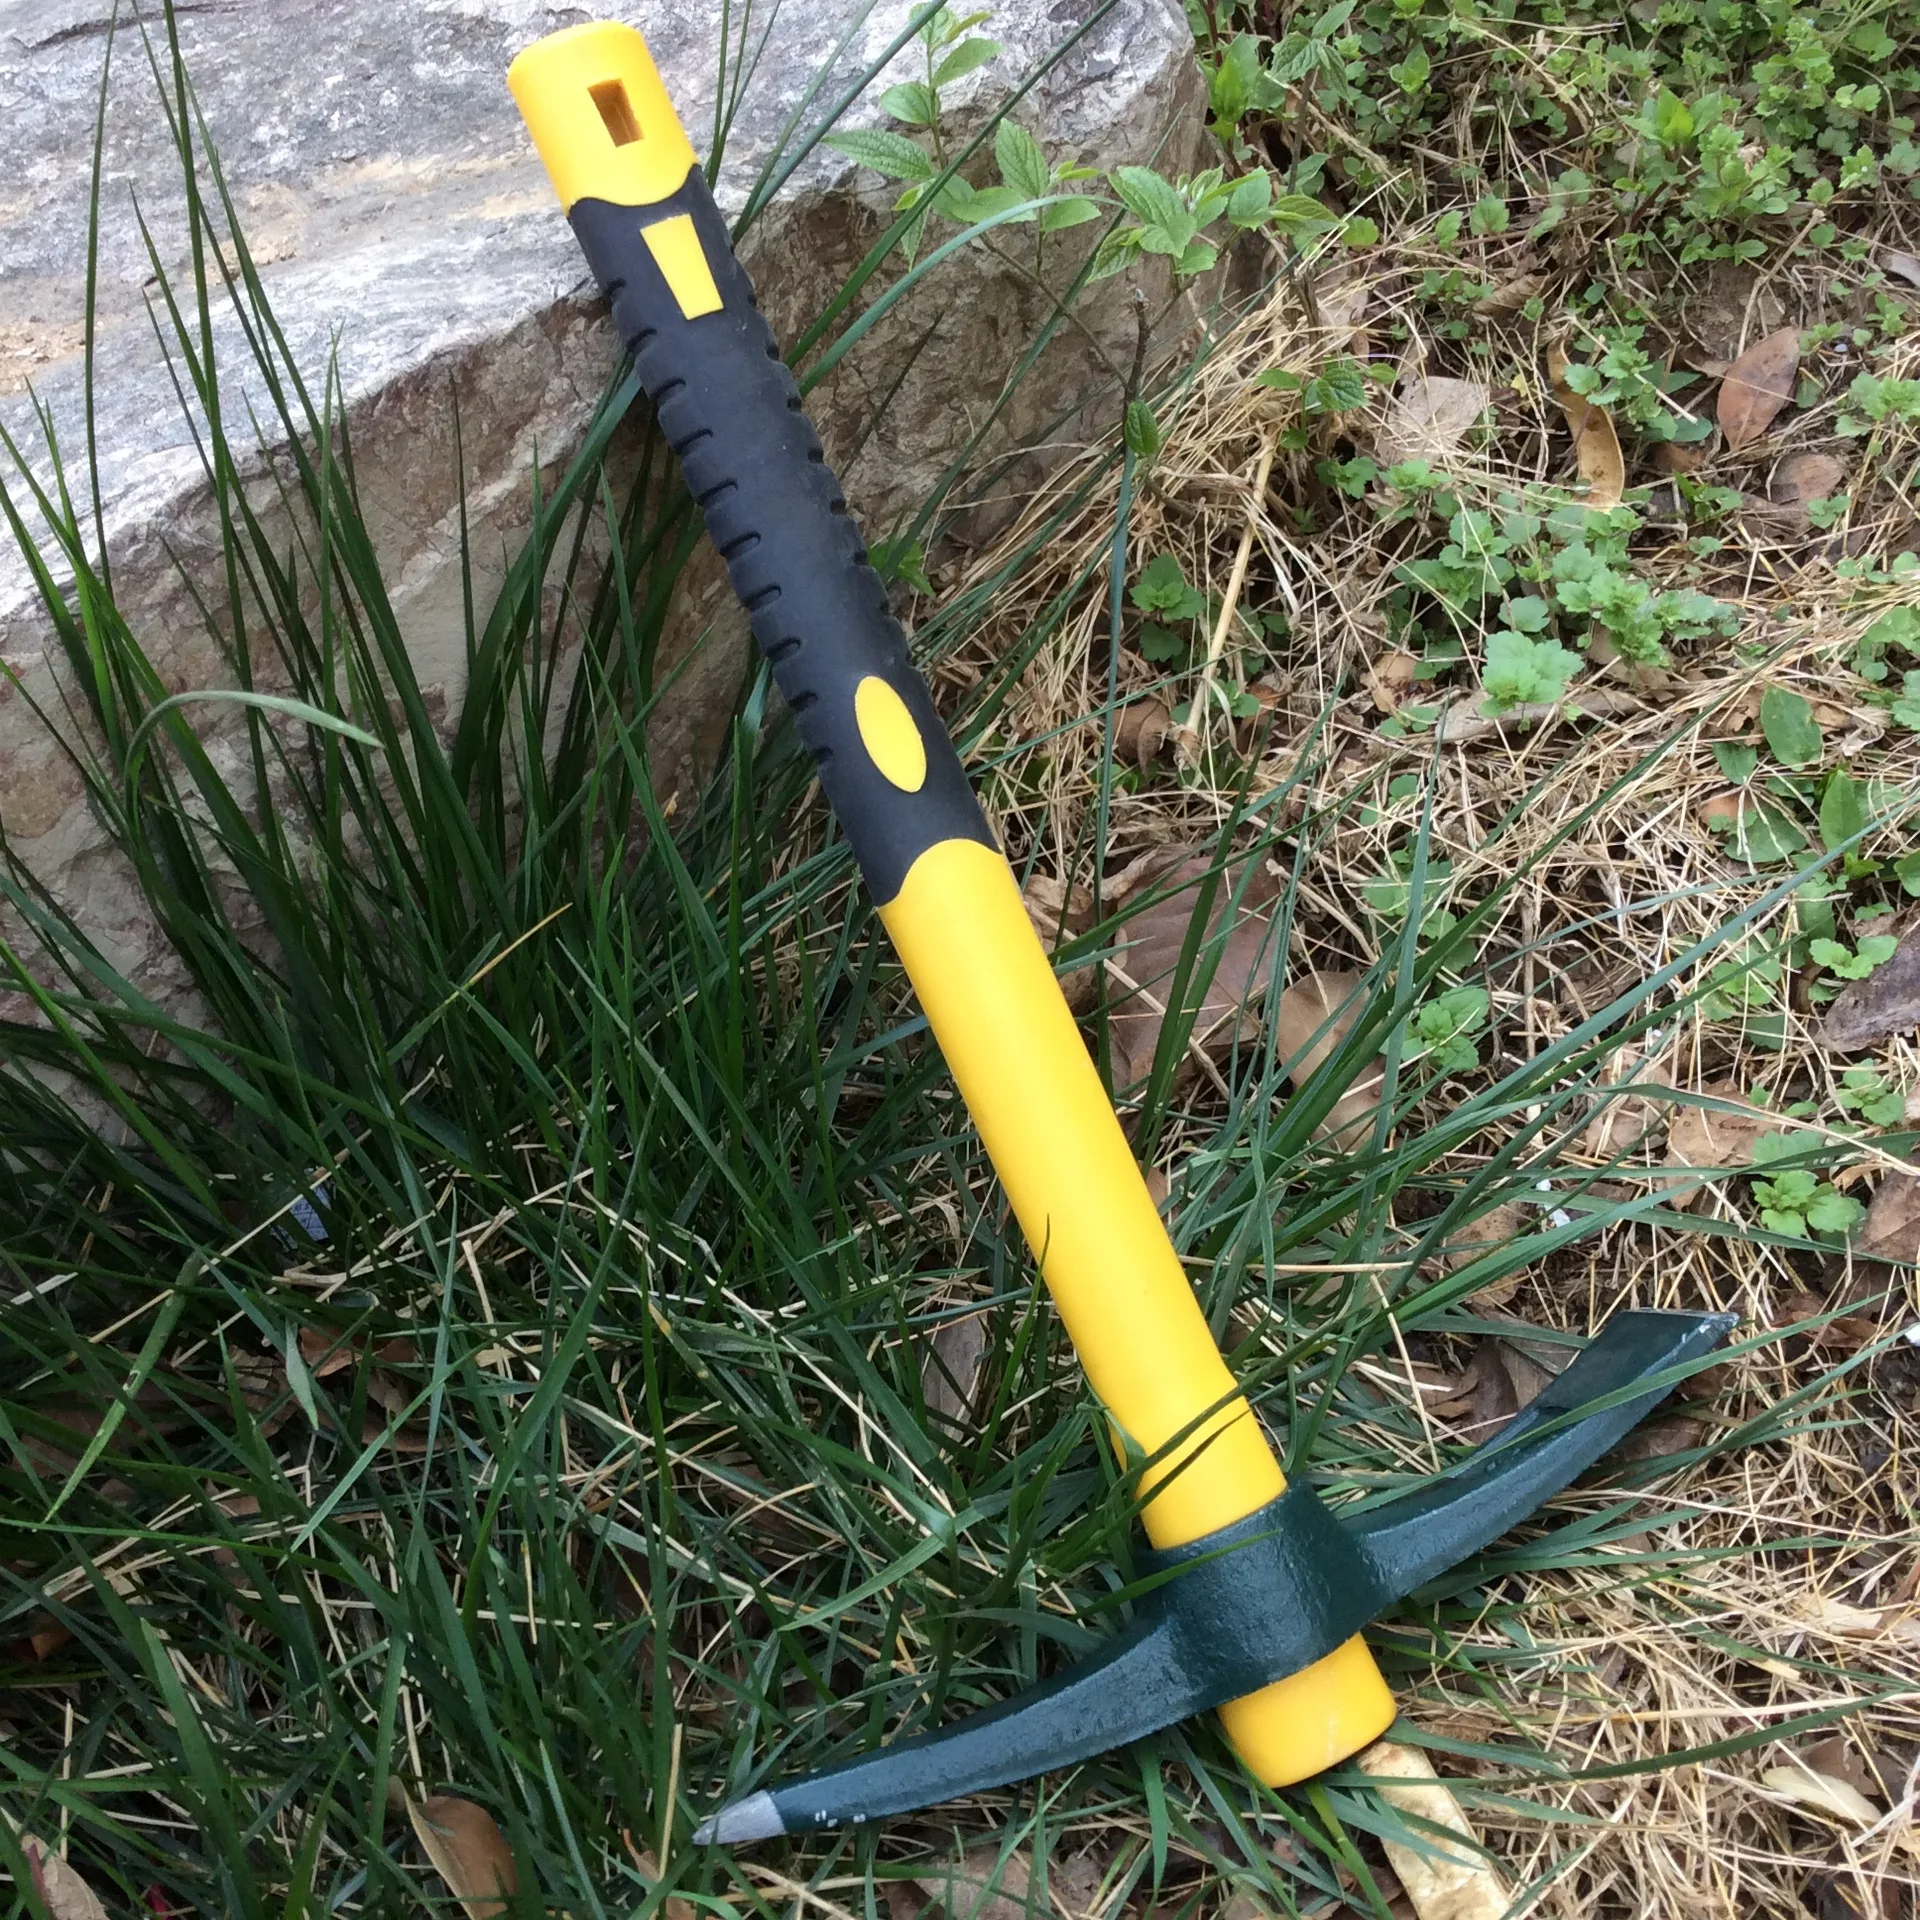 

Pickaxe Outdoor Camping Mountain Mattock Fiberglass Handle Pick Axe Small Size Garden Pick Hand Tools